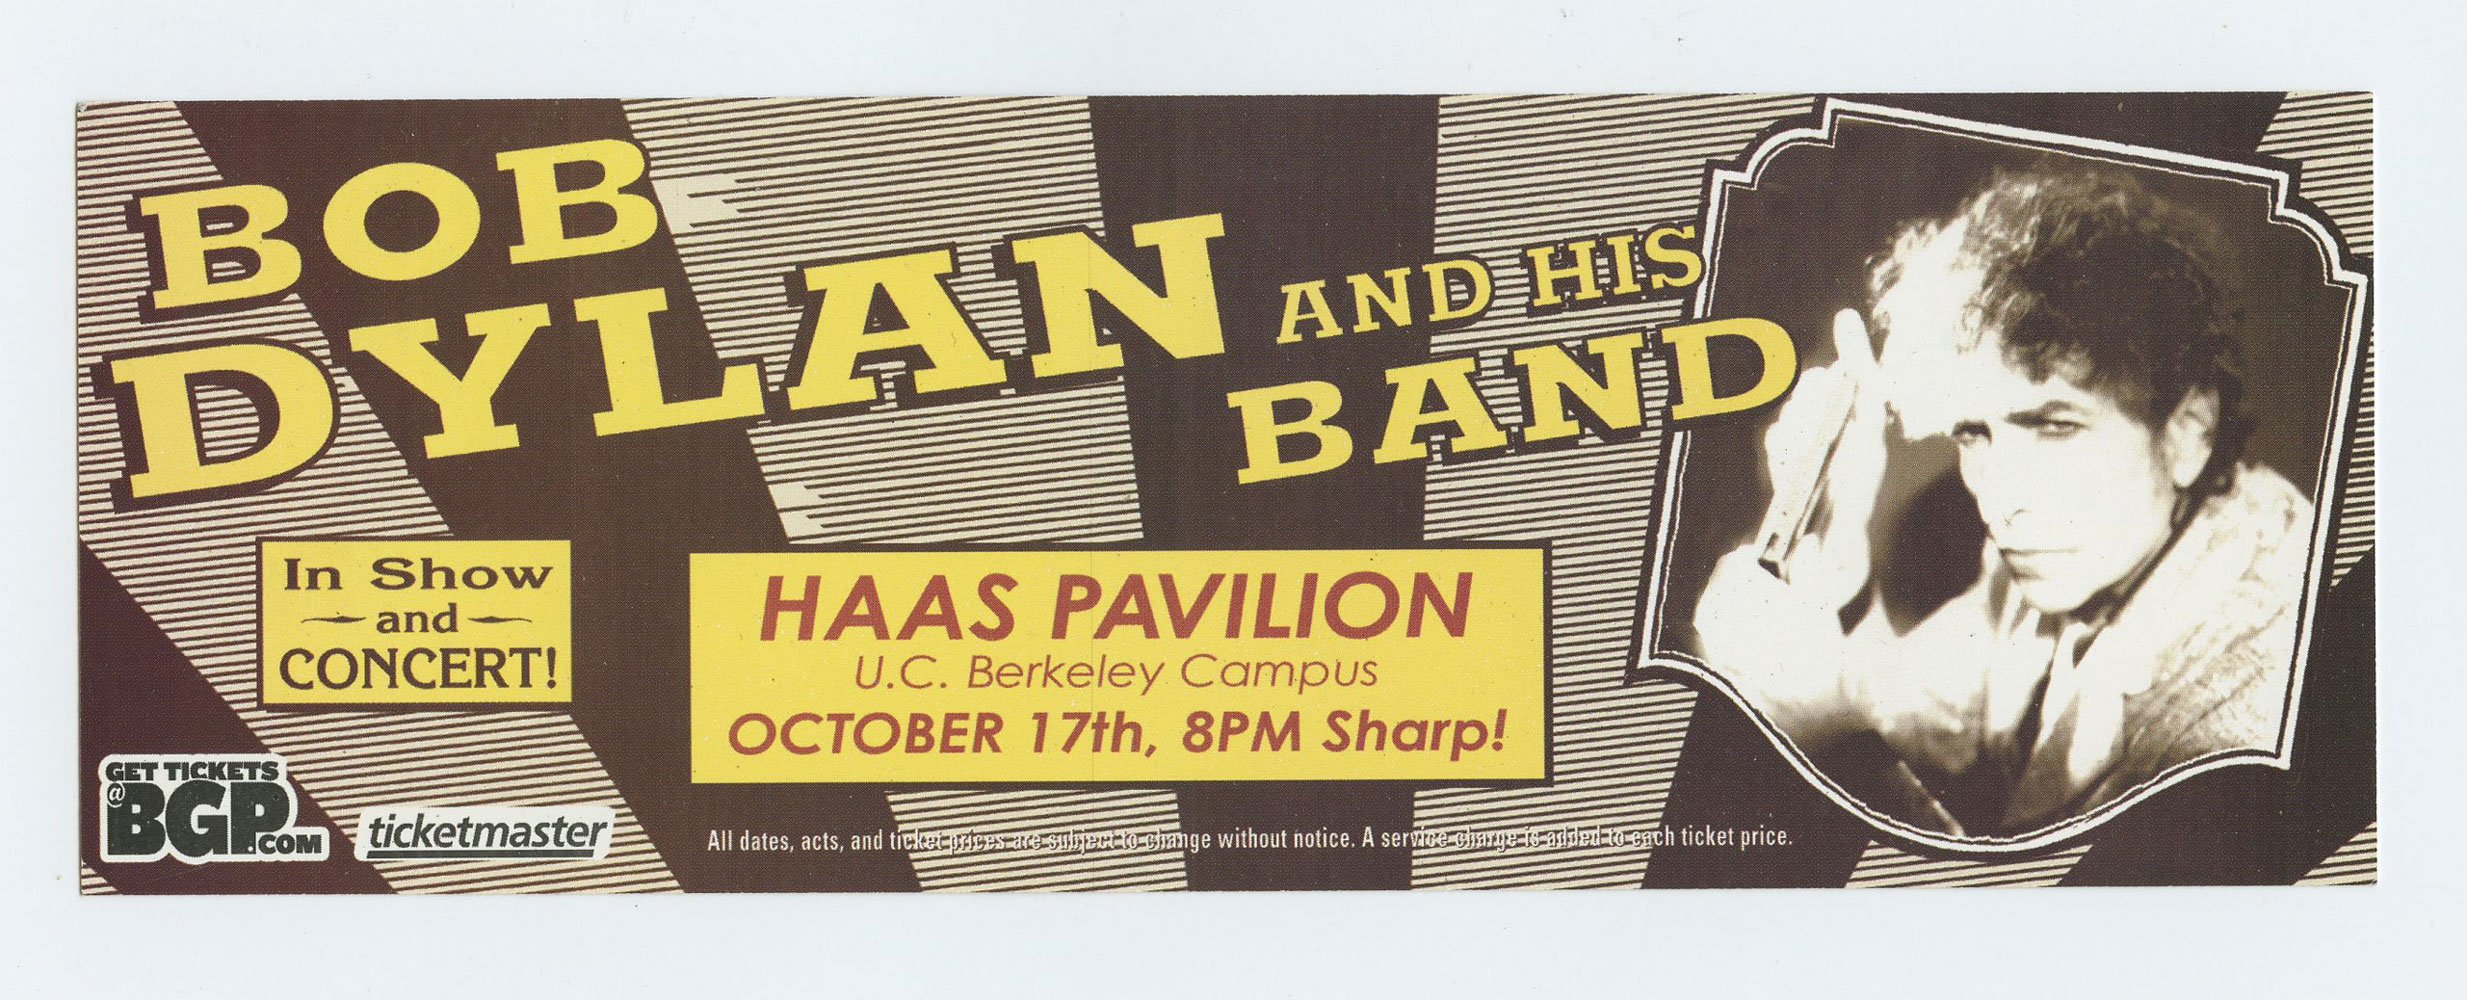 Bob Dylan Handbill 2004 Oct 17 Haas Pavilion UC Berkeley